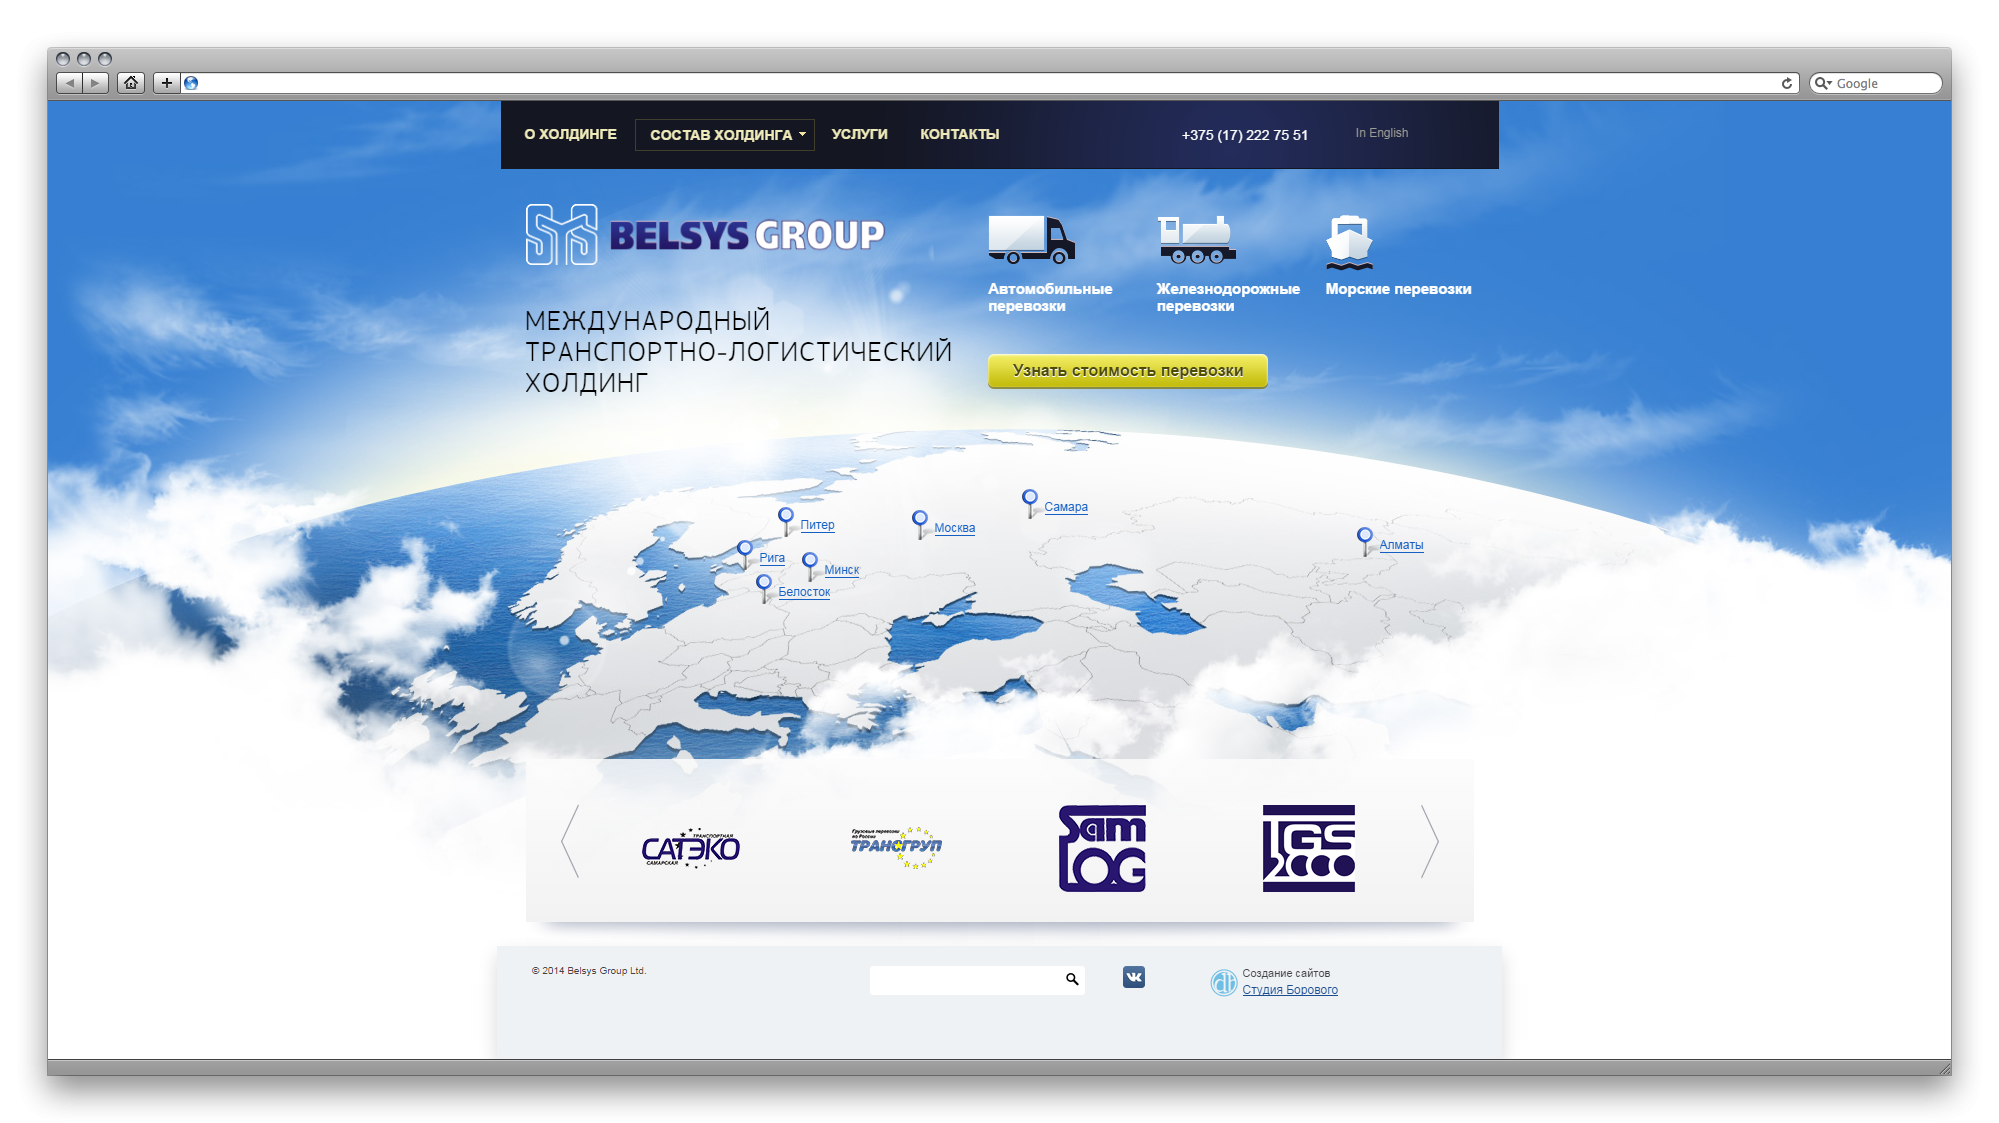 belsys group — сайт международного холдинга